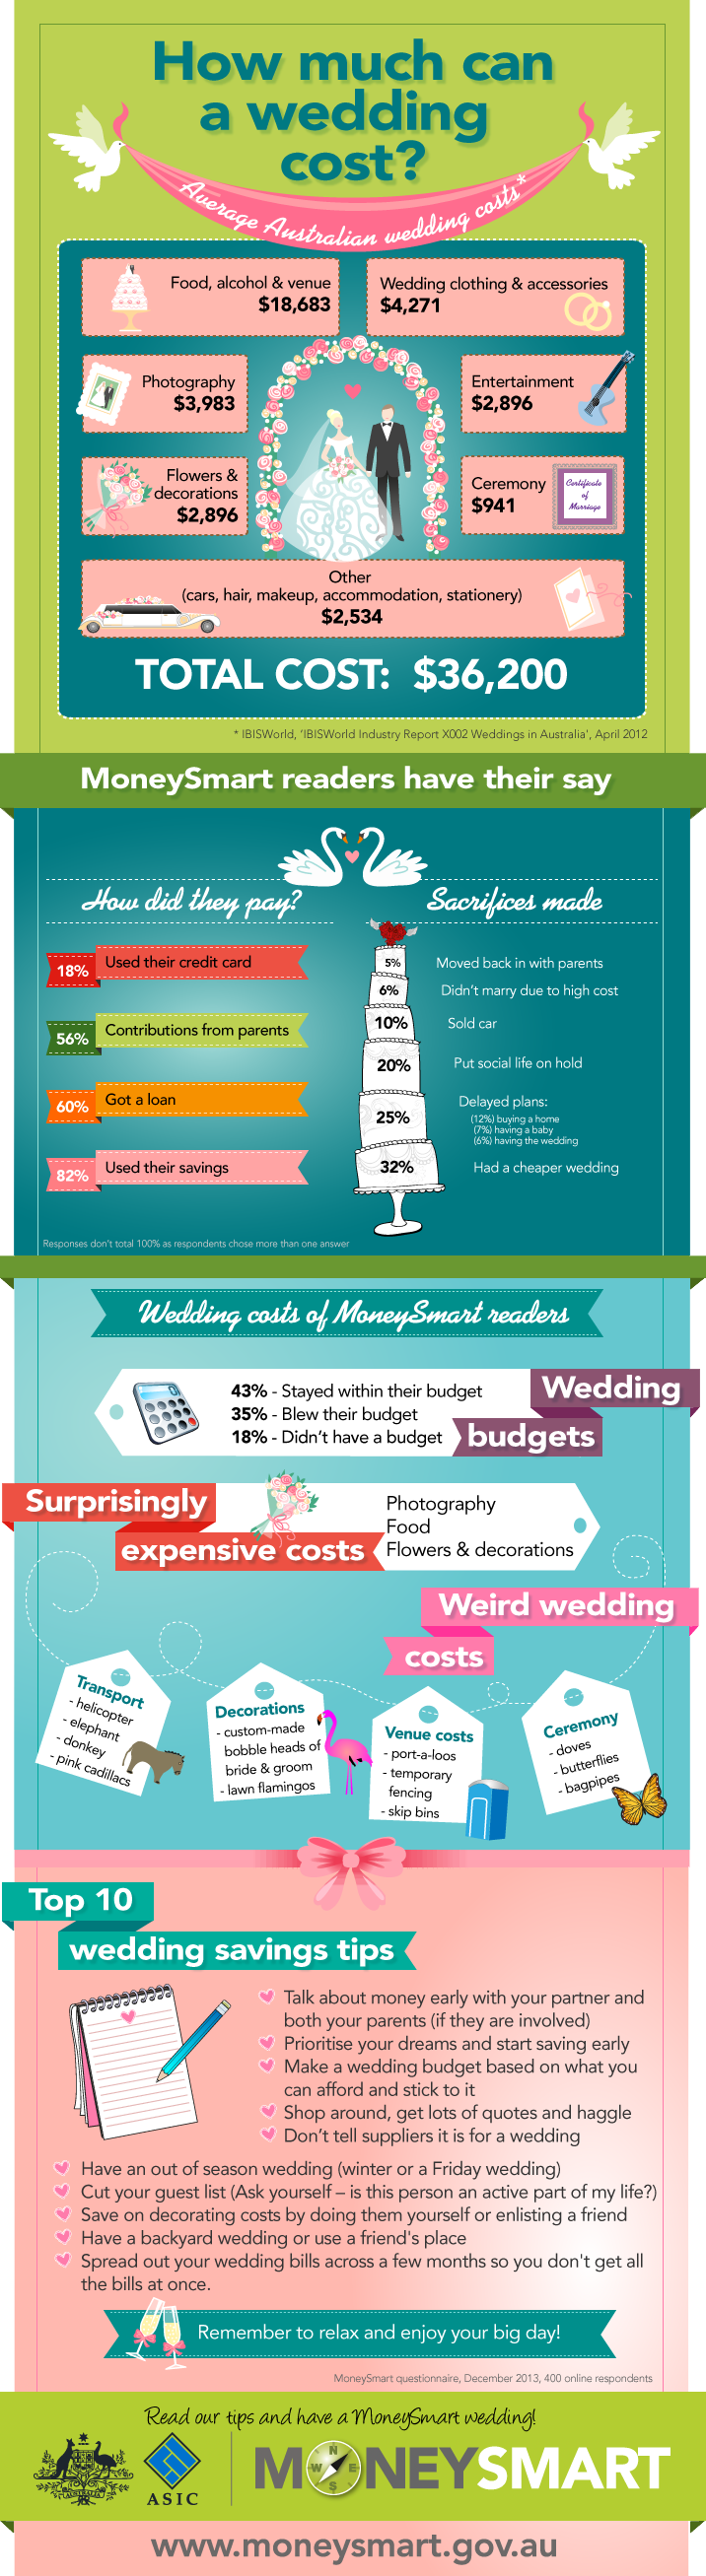 moneysmart-infographic-wedding-costs-9121744